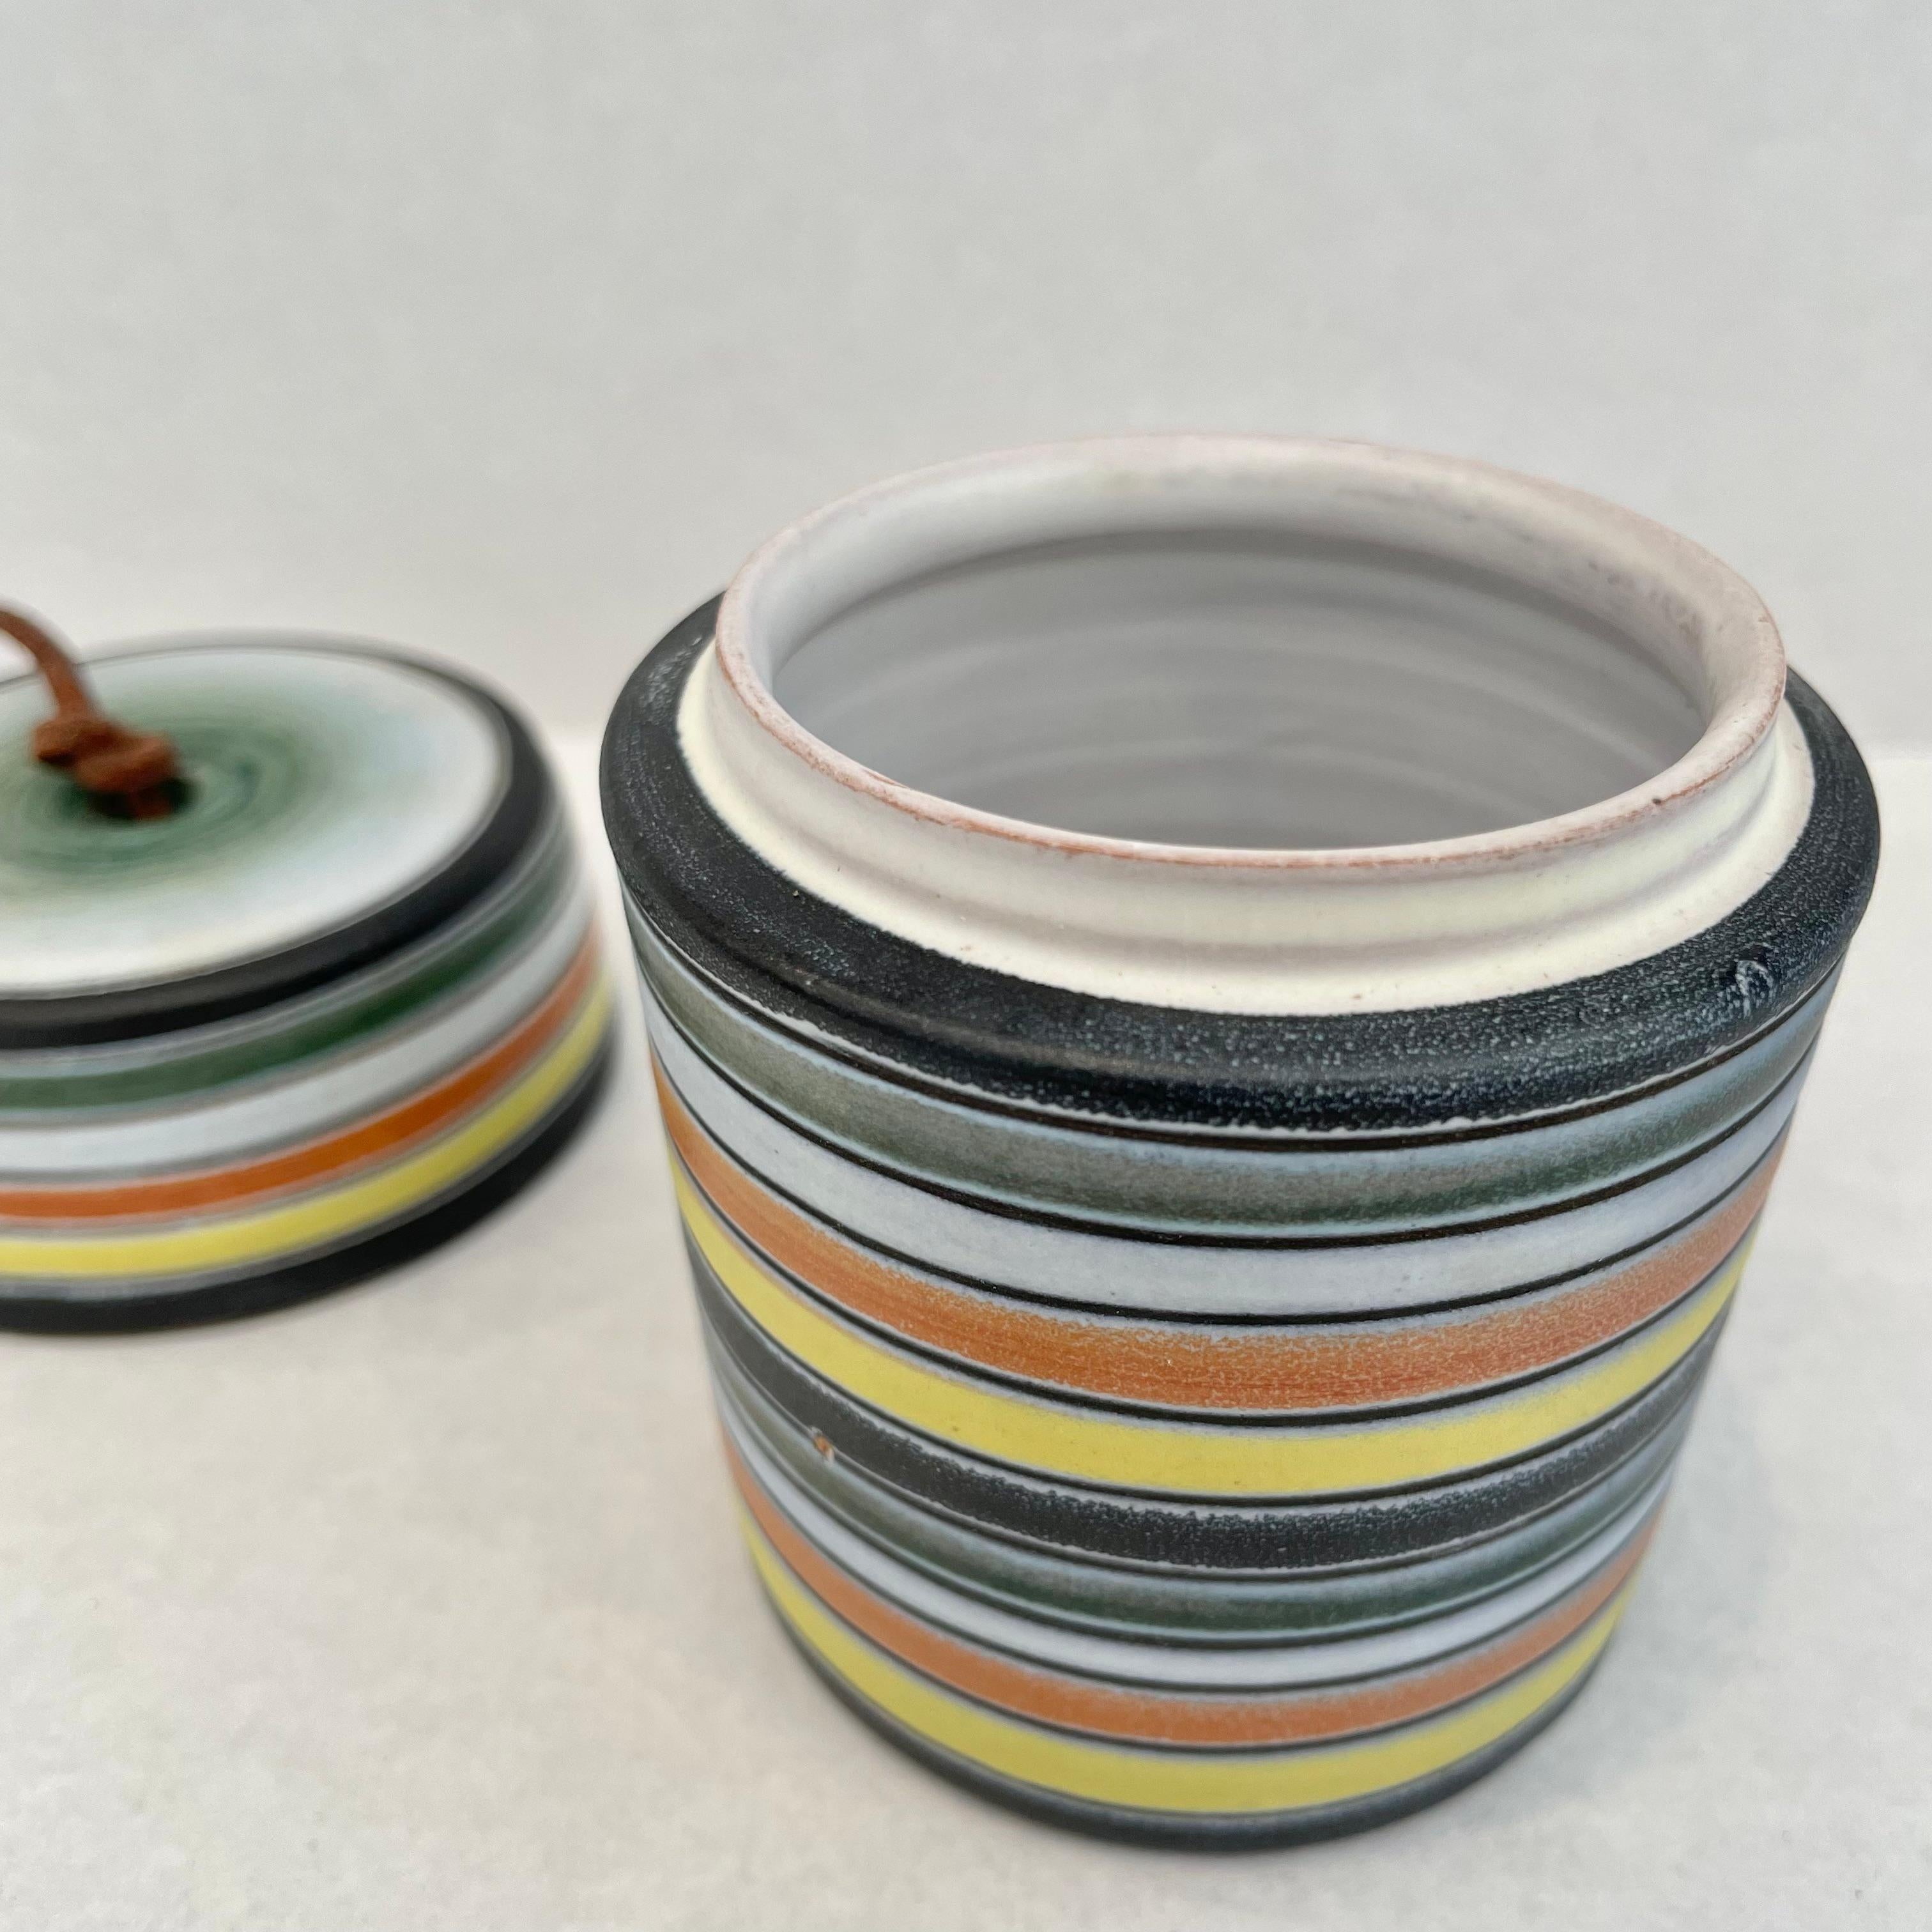 Fantastic hand painted ceramic stash jar by Raymor. Underside reads 